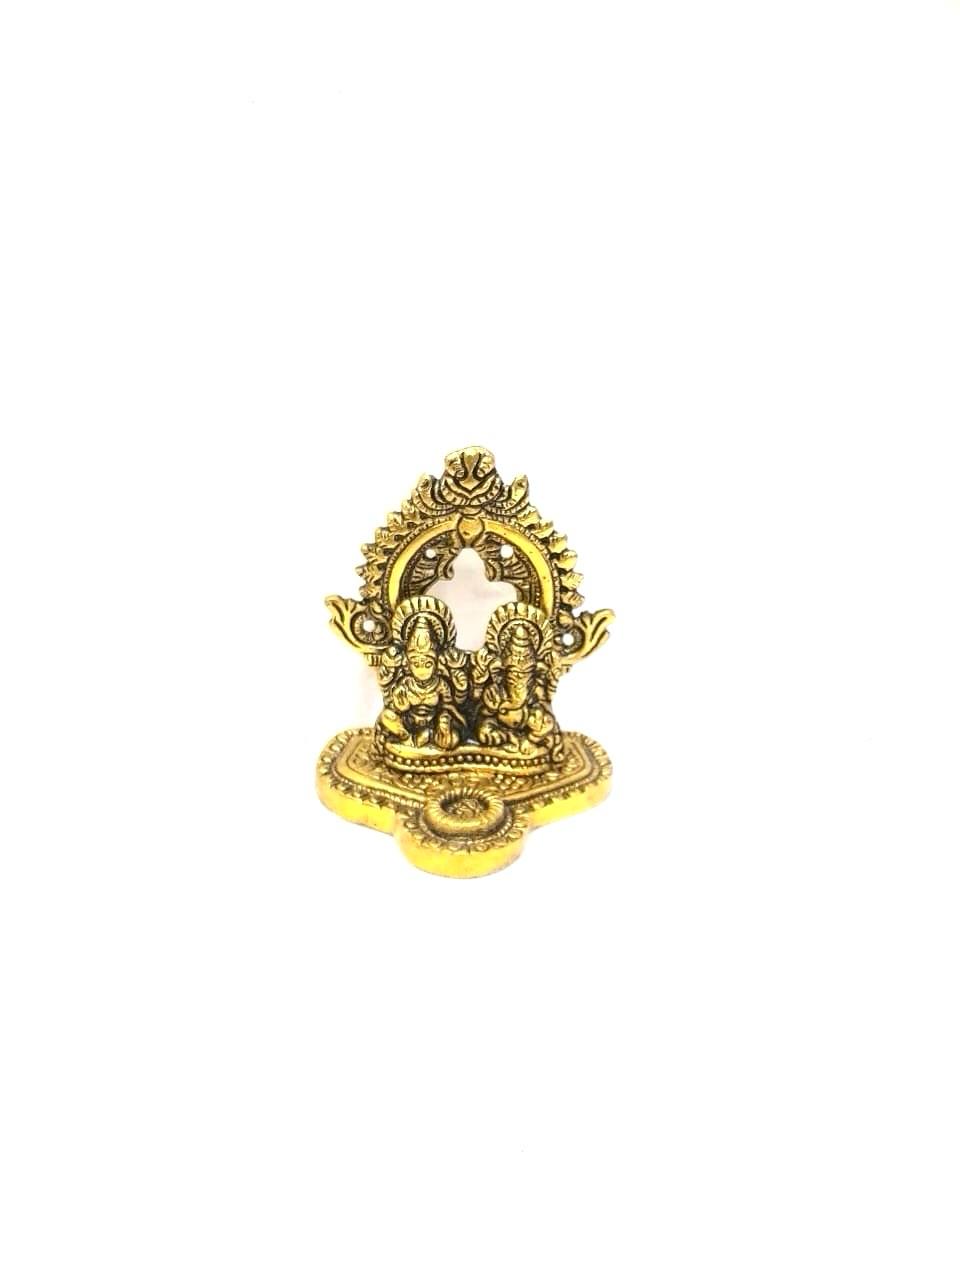 Ganesha Lakshmi Jharokha New Design Gifts Décor Handcrafted Metal Tamrapatra